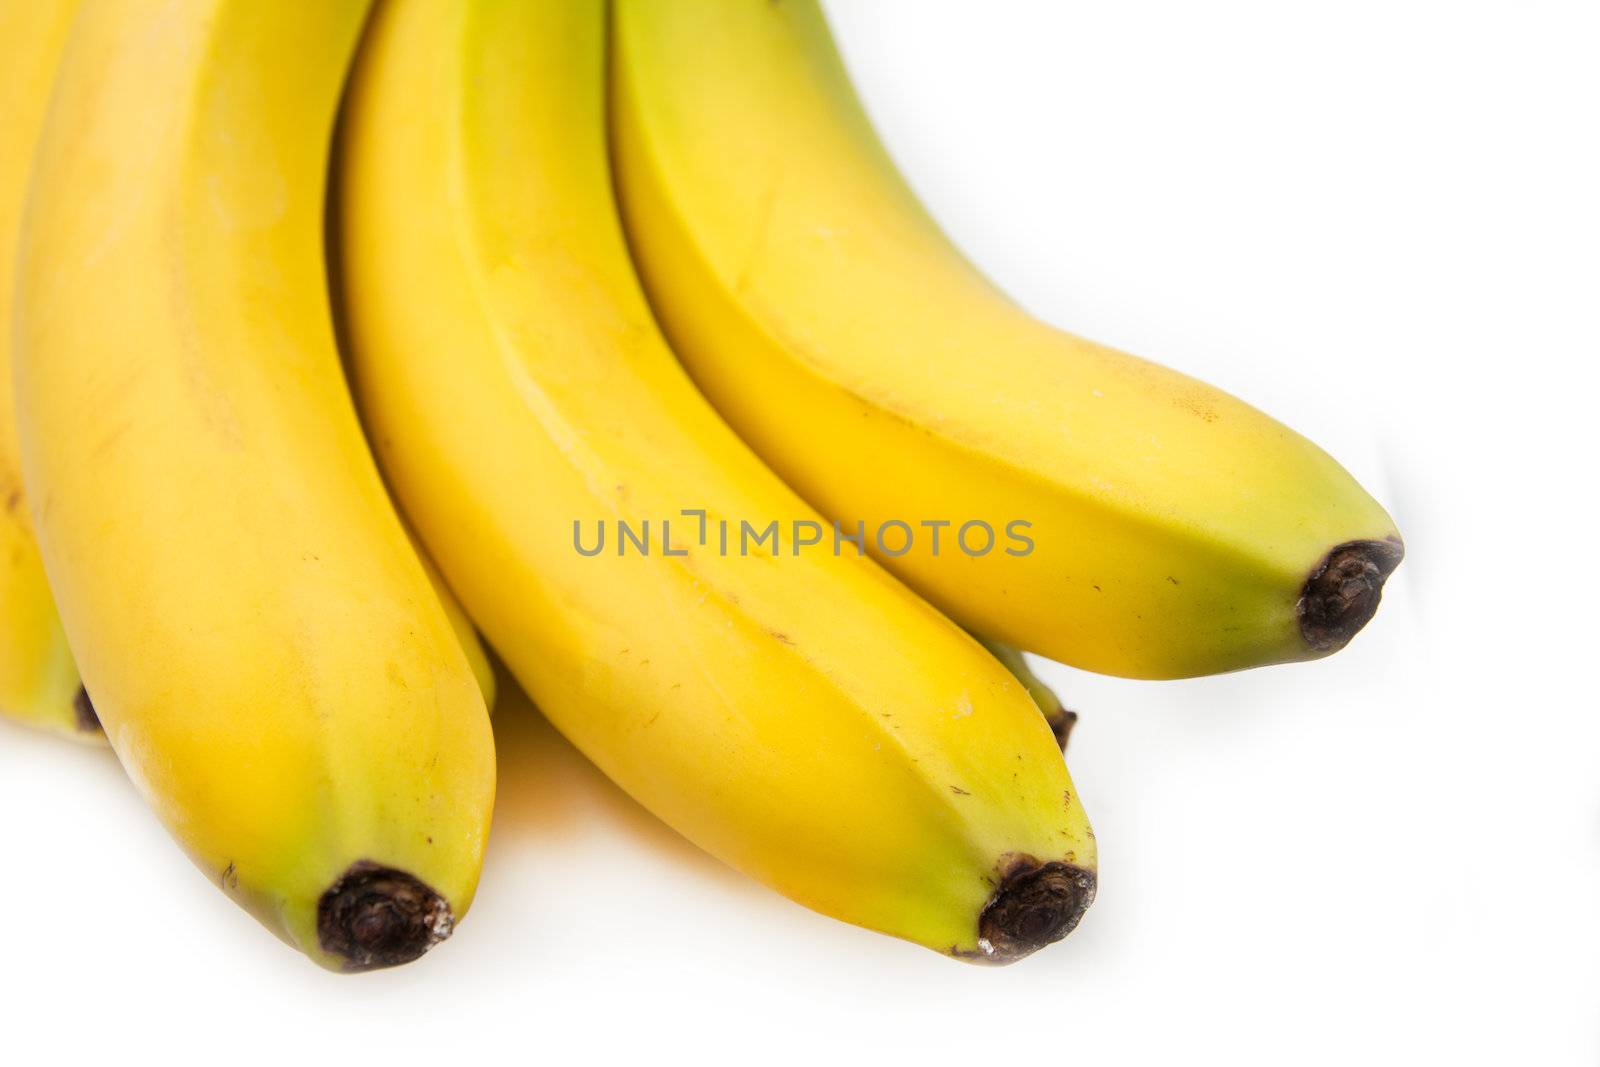 fresh bananas on white background by schankz